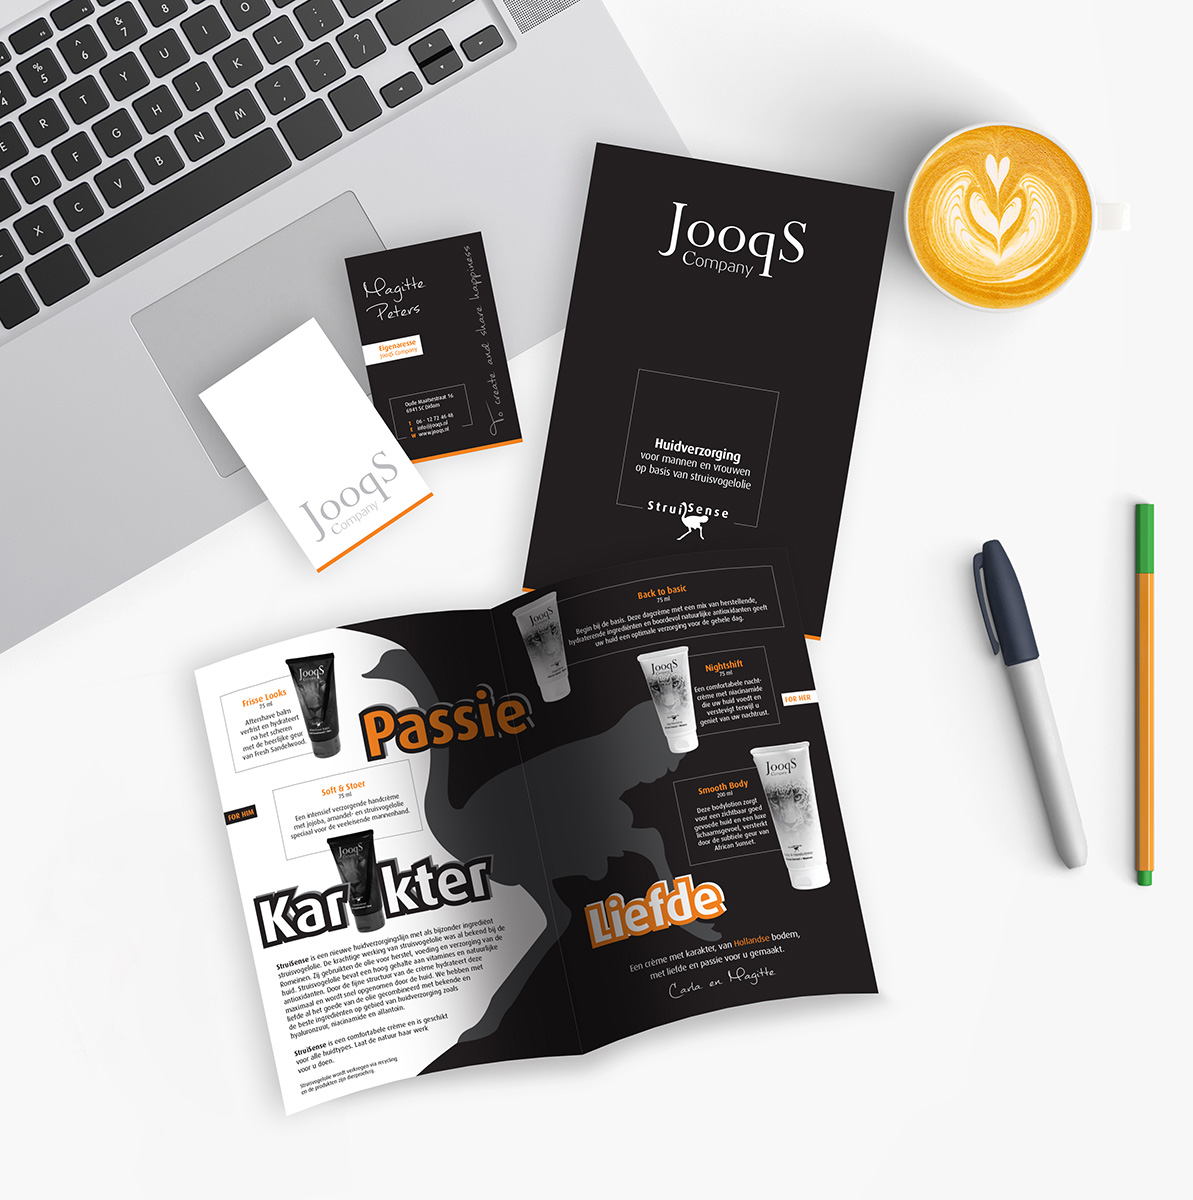 Huisstijl JooqS | DesignedBy